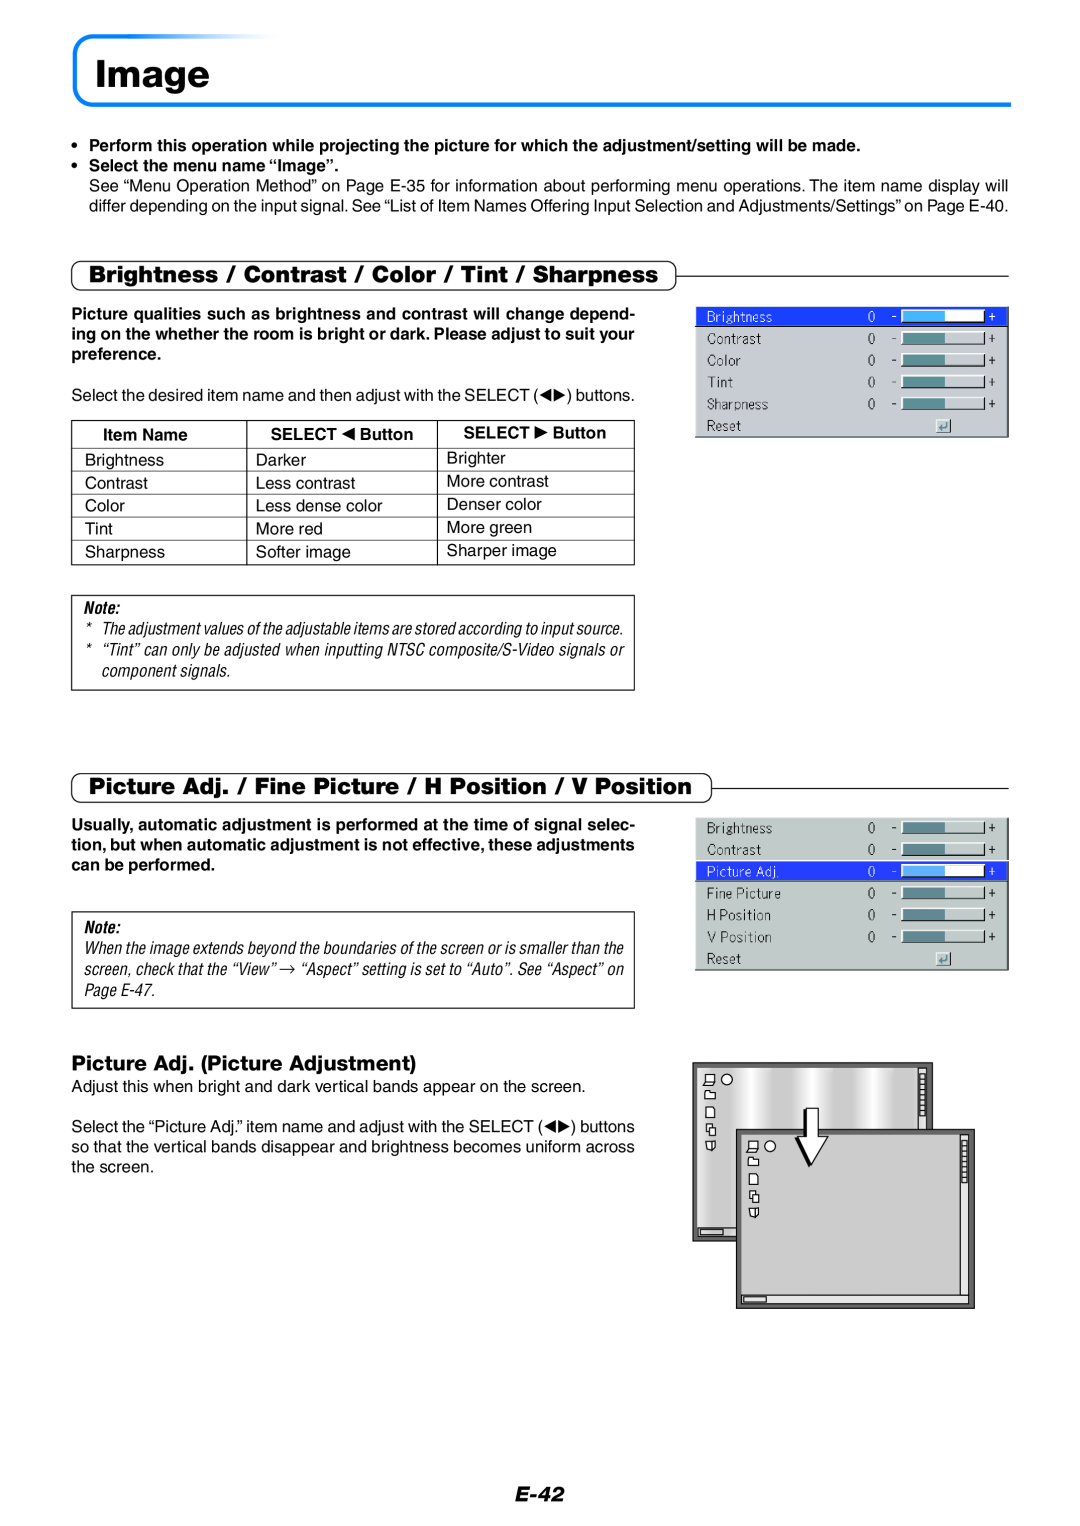 PLUS Vision U4-232 Image, Brightness / Contrast / Color / Tint / Sharpness, Picture Adj. Picture Adjustment, E-42 